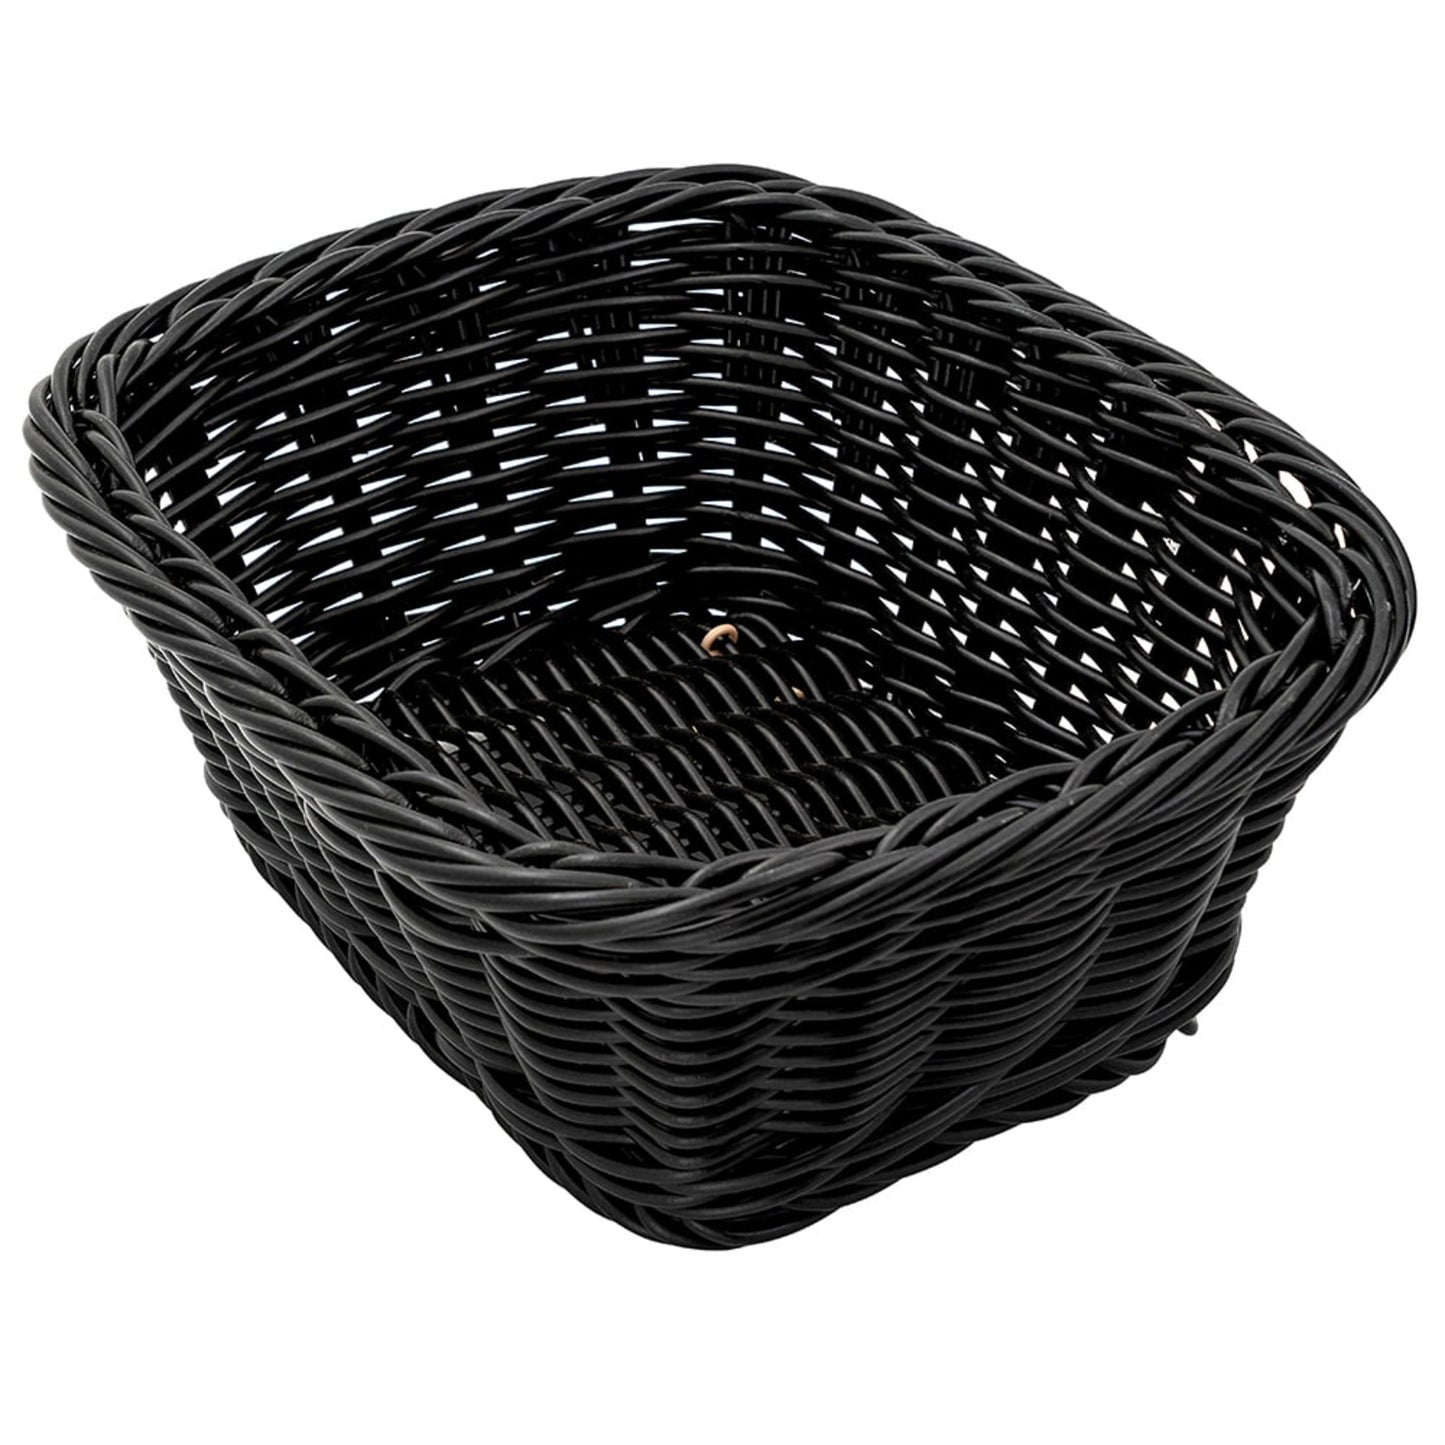 9.5" x 7.75" Rectangular Basket